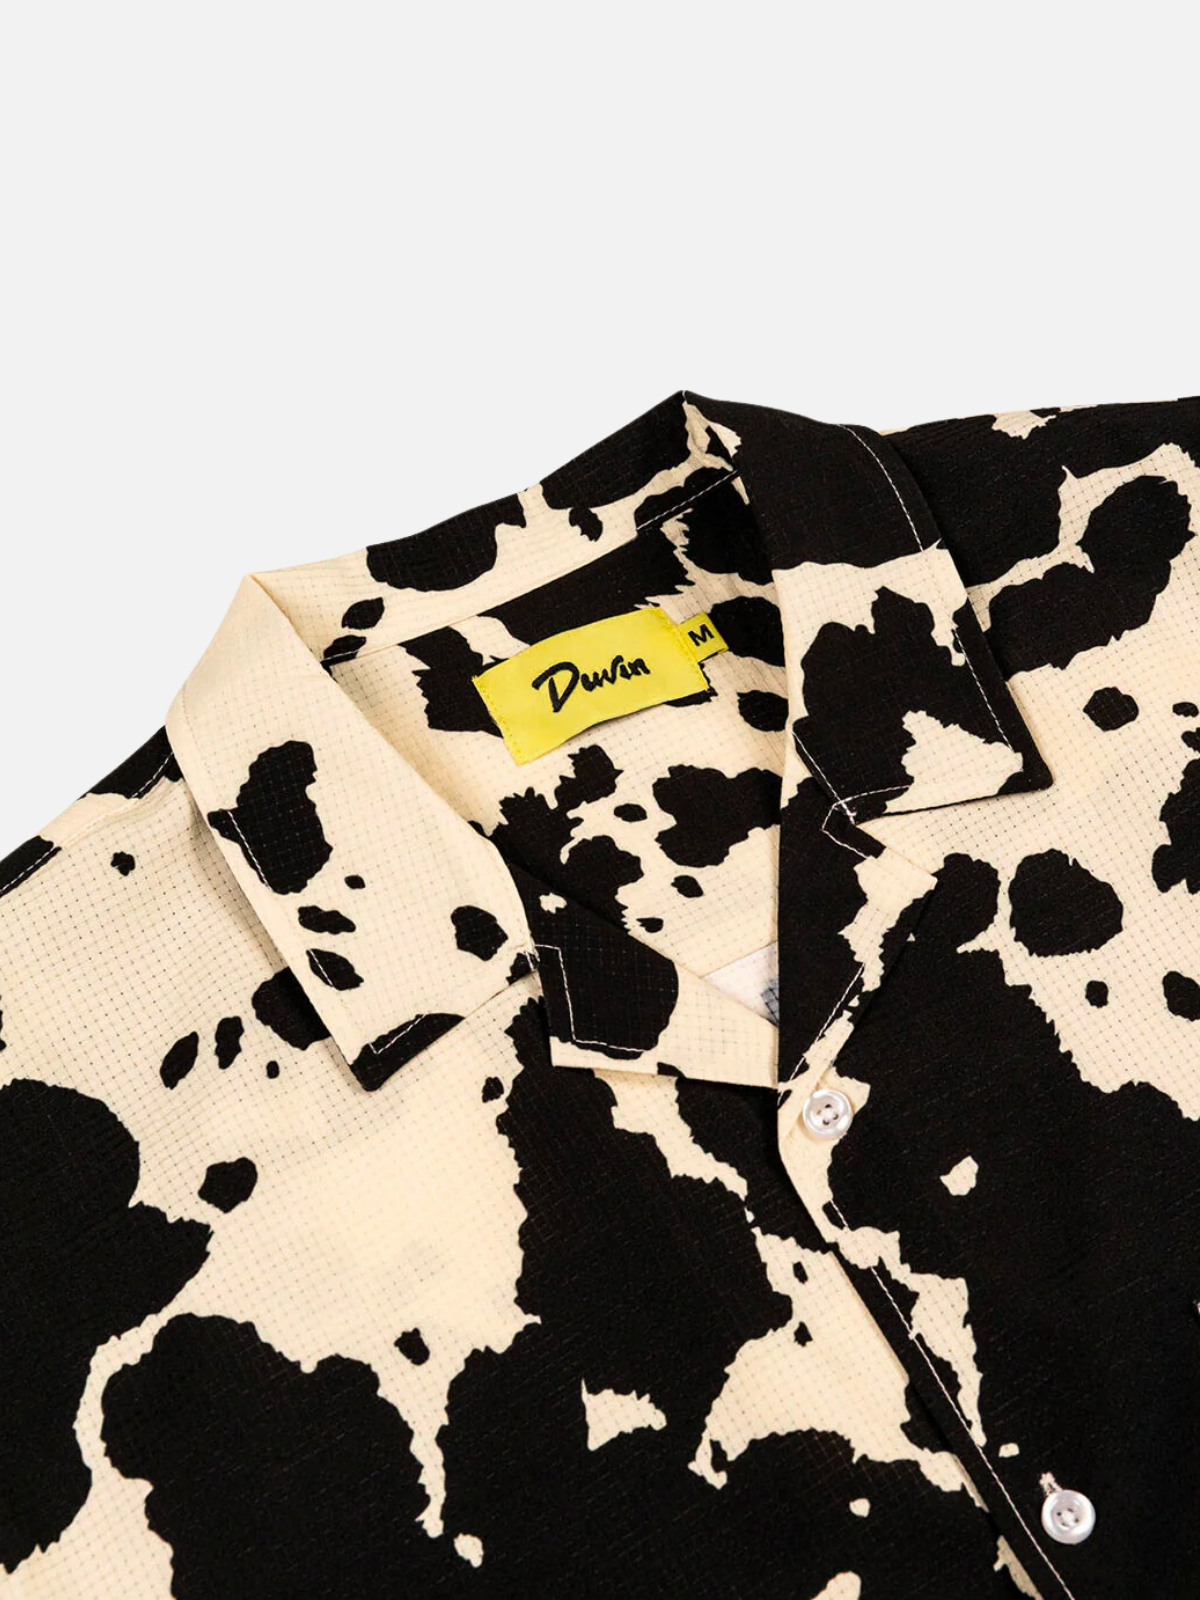 duvin cow leisure stretch buttonup black white print polyester spandex blend kempt athens ga georgia men's clothing store